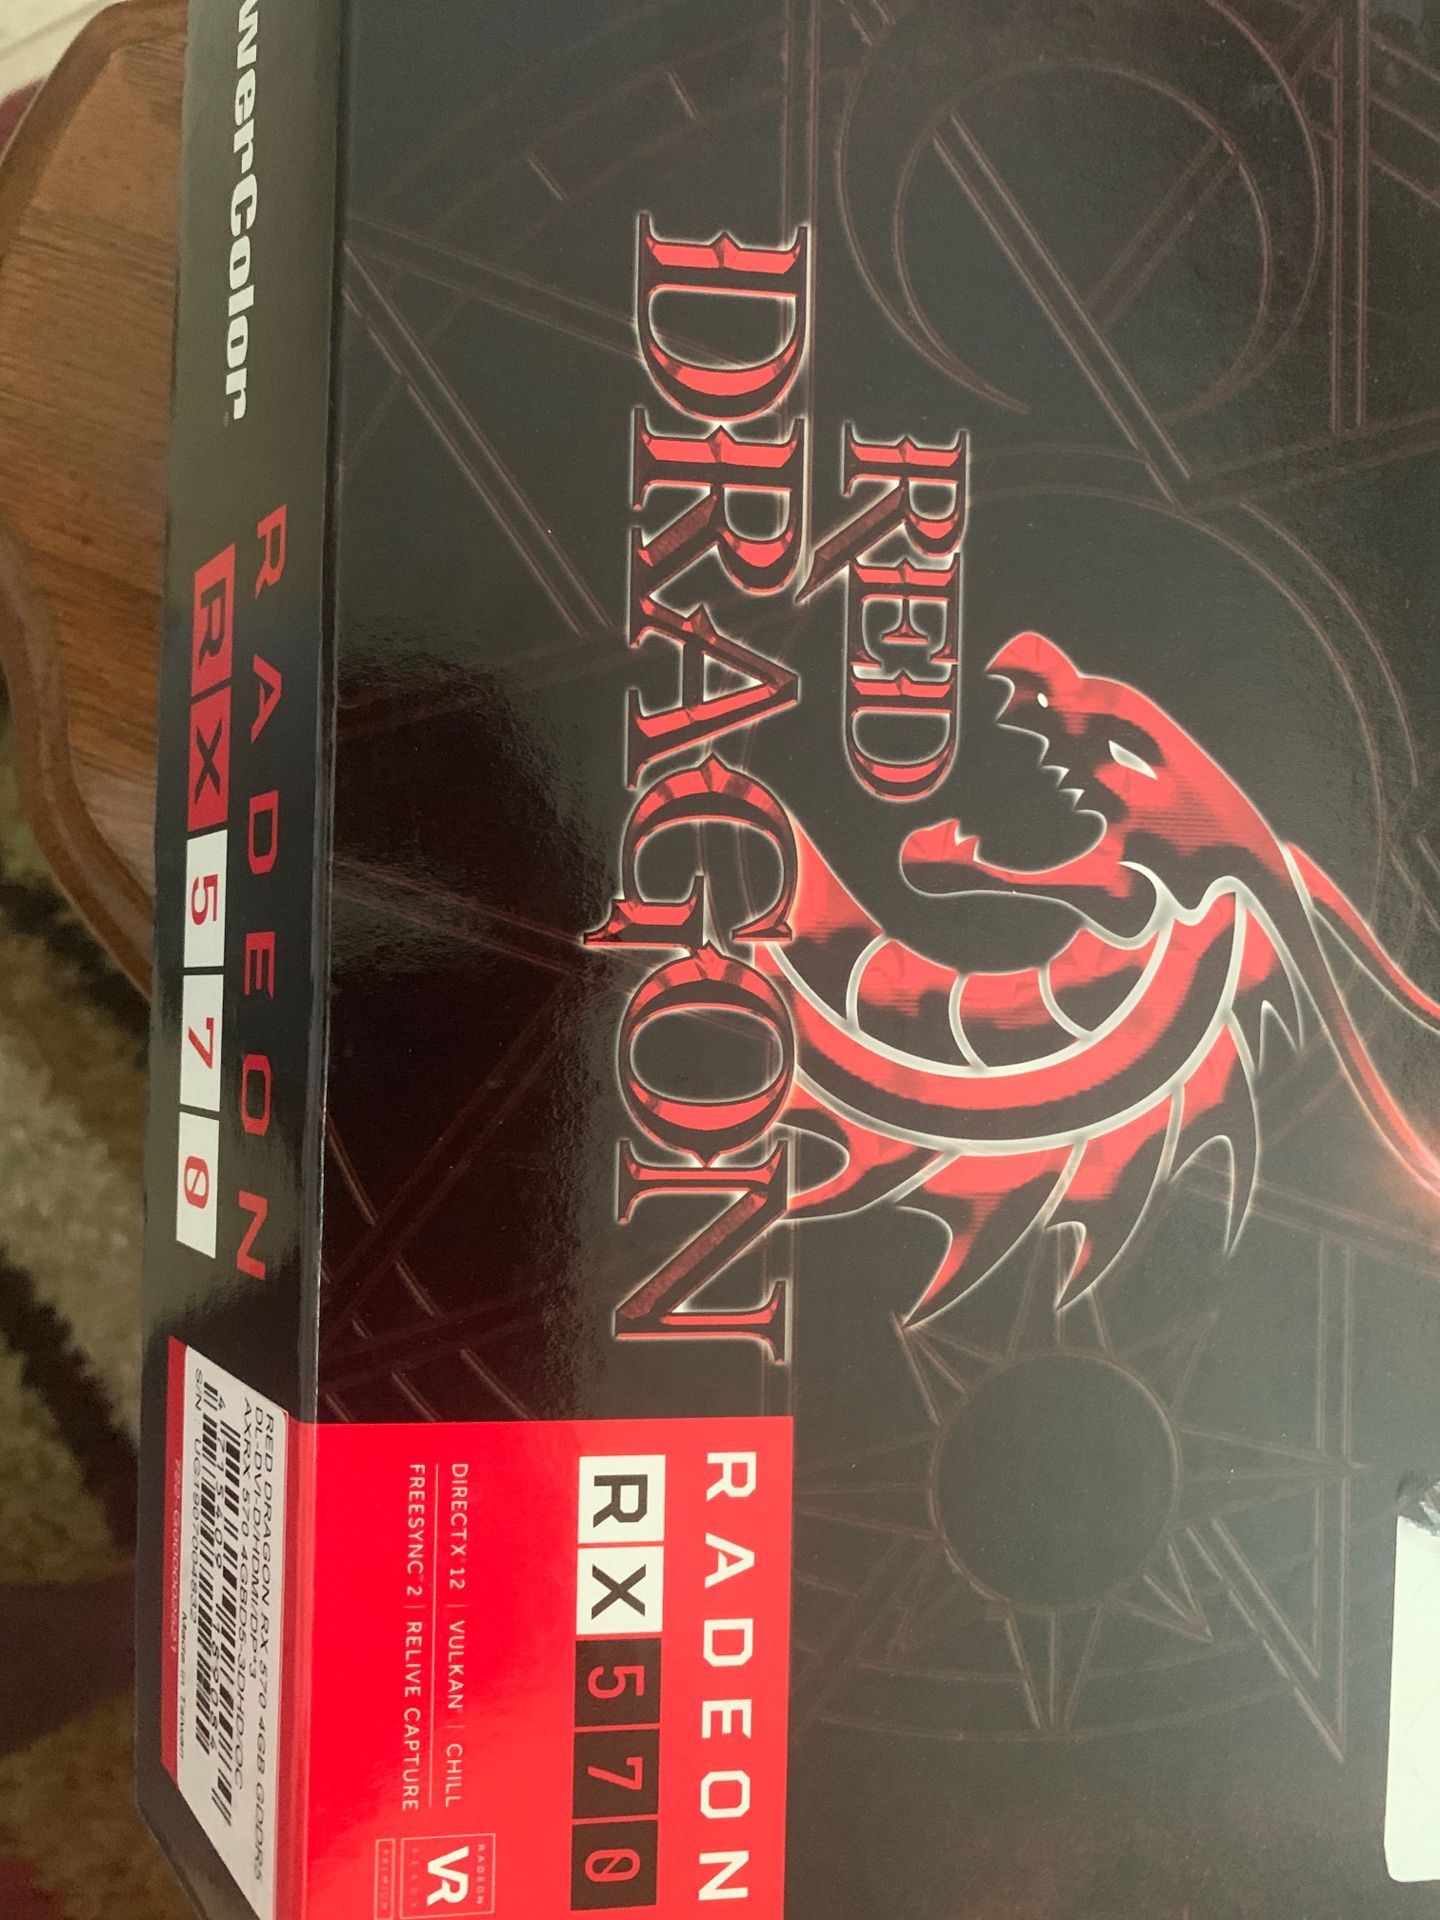 Red Dragon Radeon RX 570 4gb